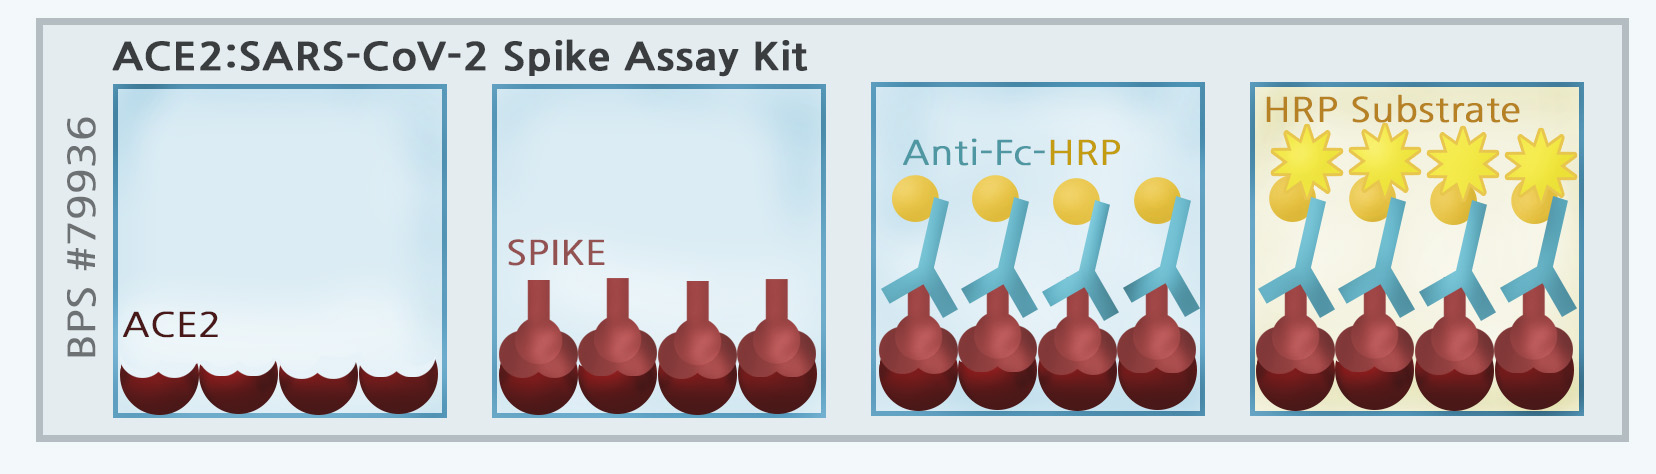 ACE2: Spike S1 RBD (SARS-CoV-2) Inhibitor Screening Assay Kit